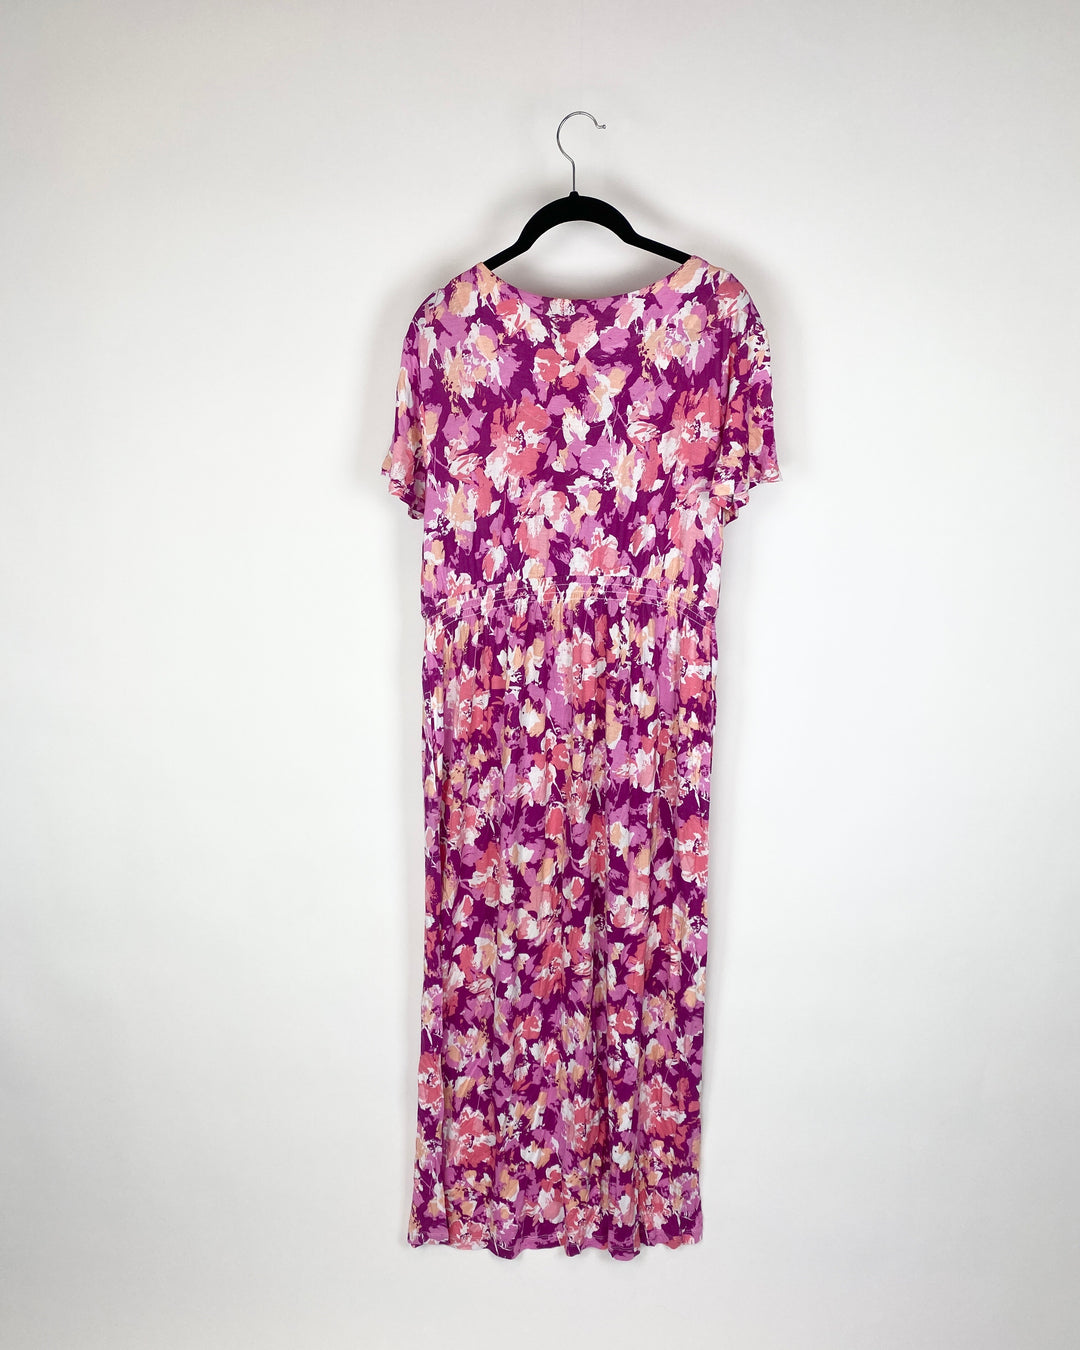 Pink Floral Print Dress - Size 6/8